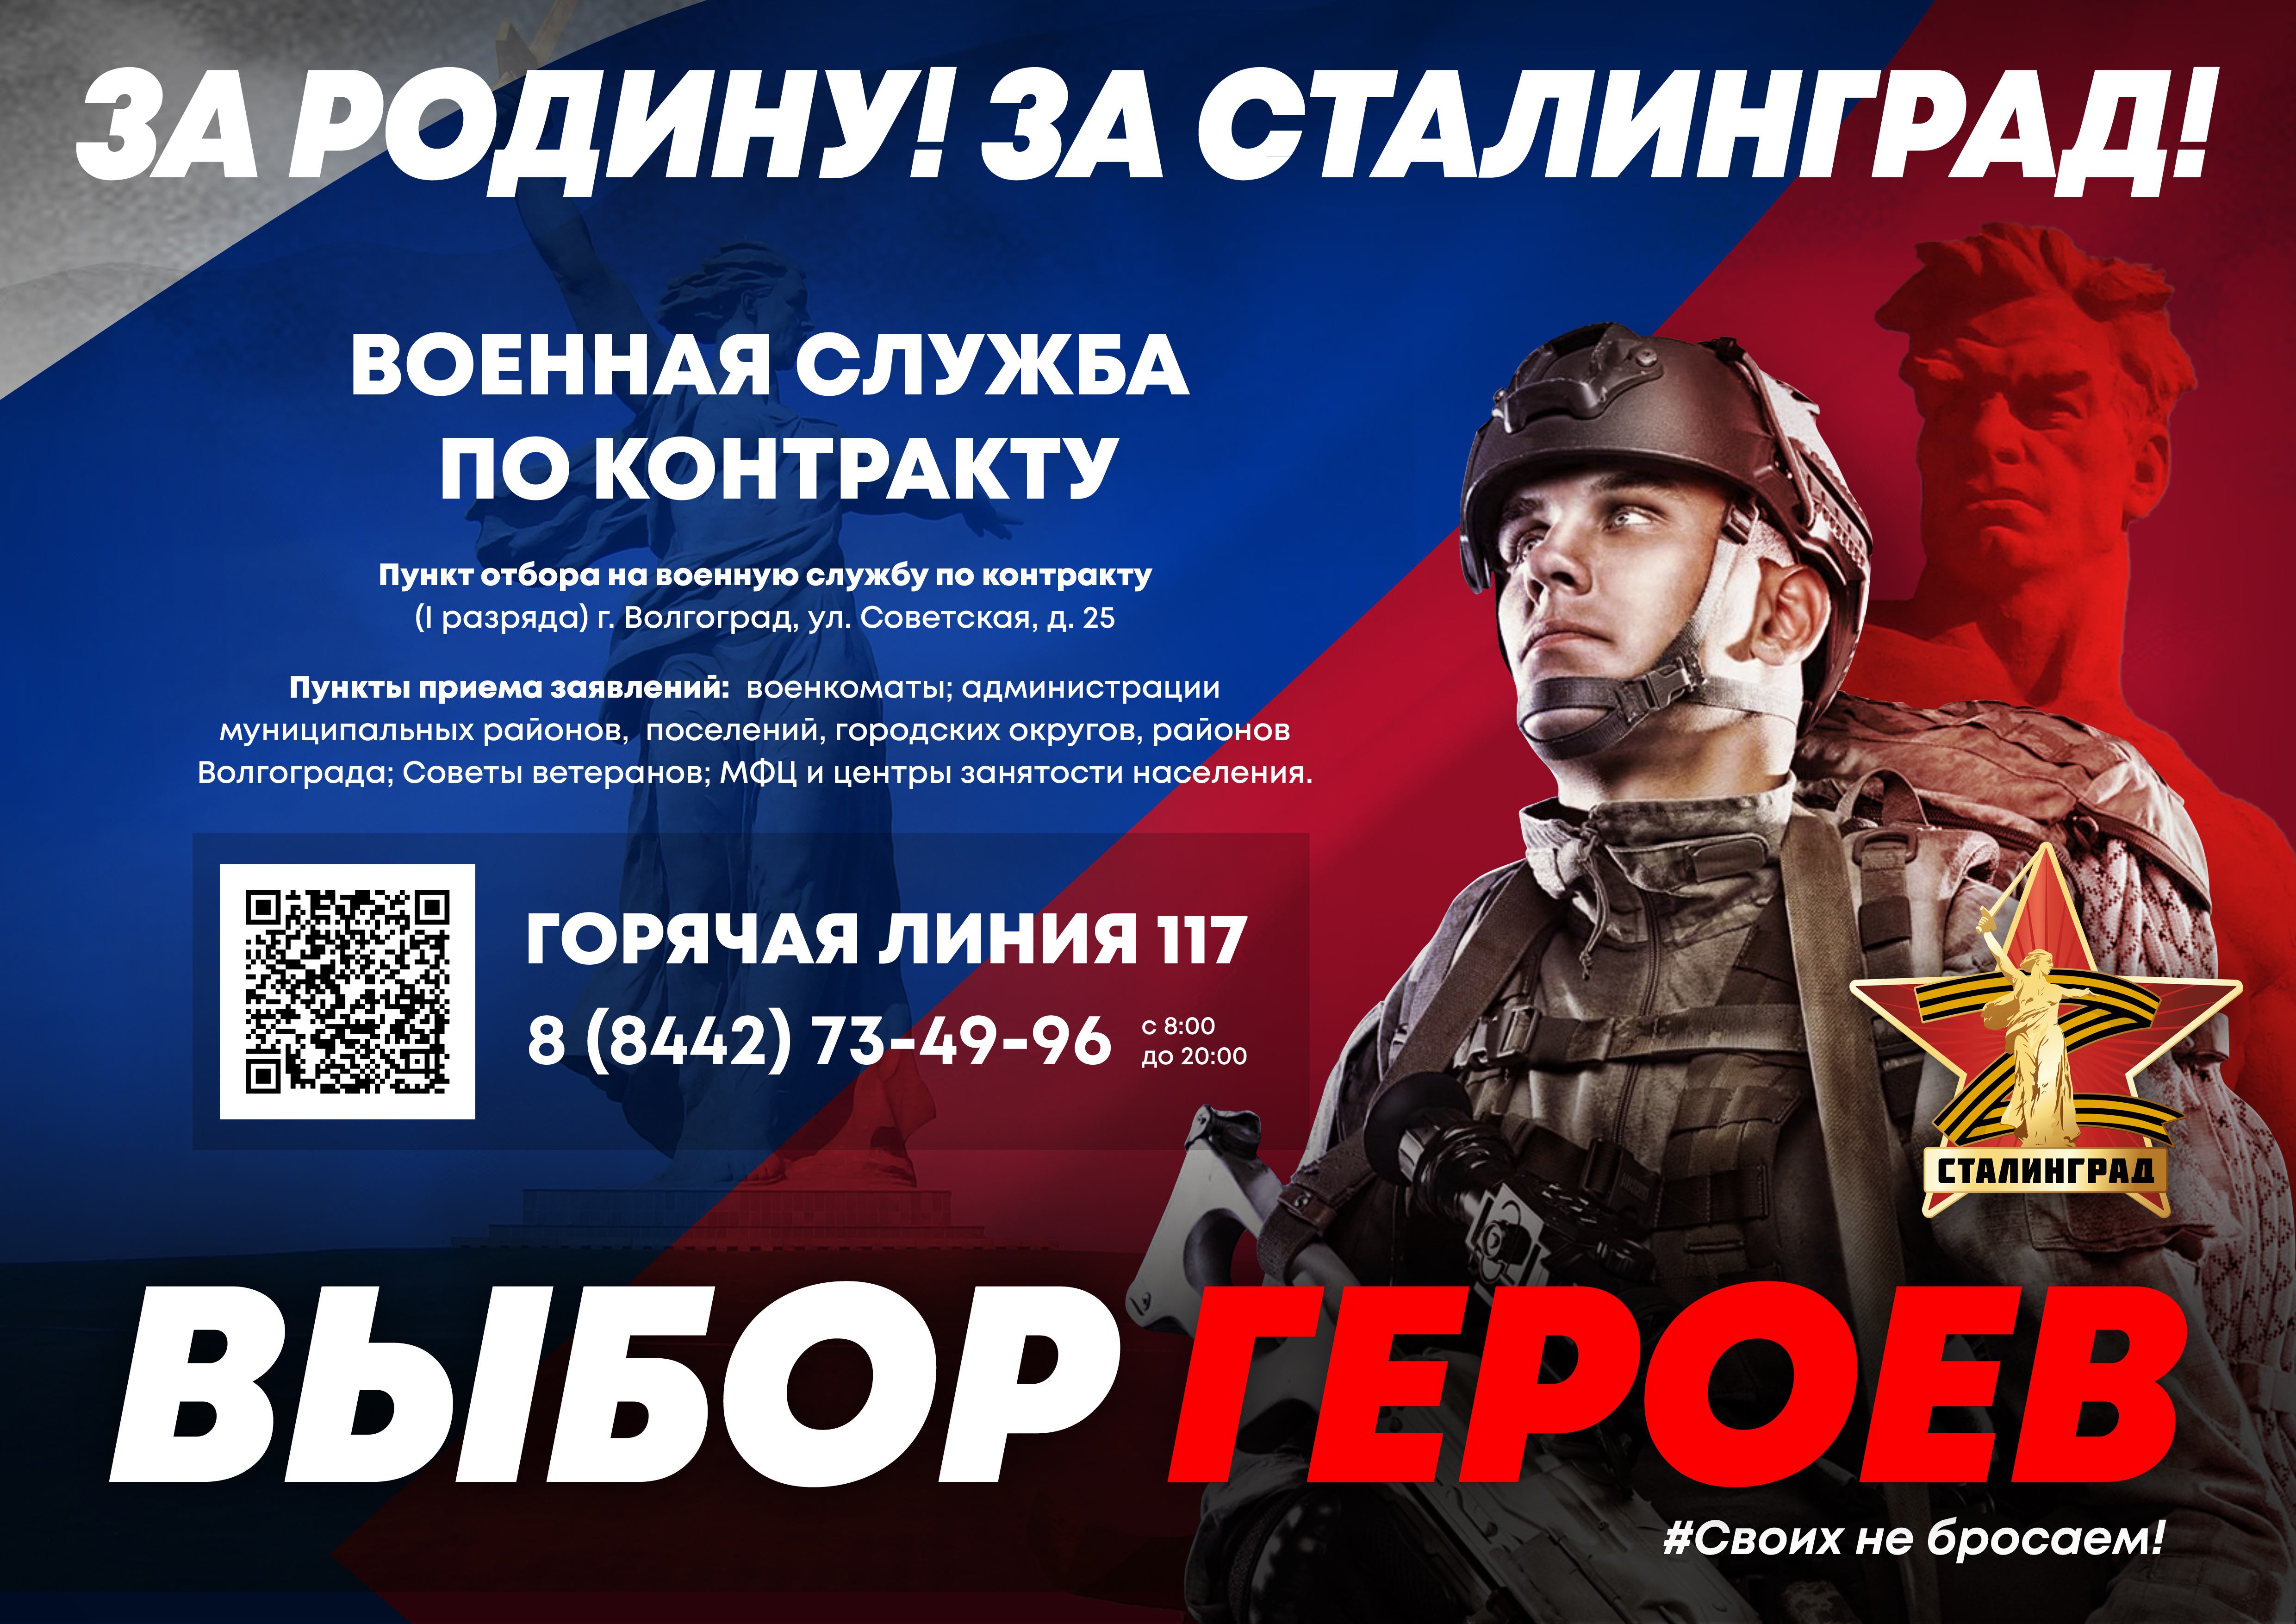 https://serad.ru/images/banners/banner-kontrakt.jpg